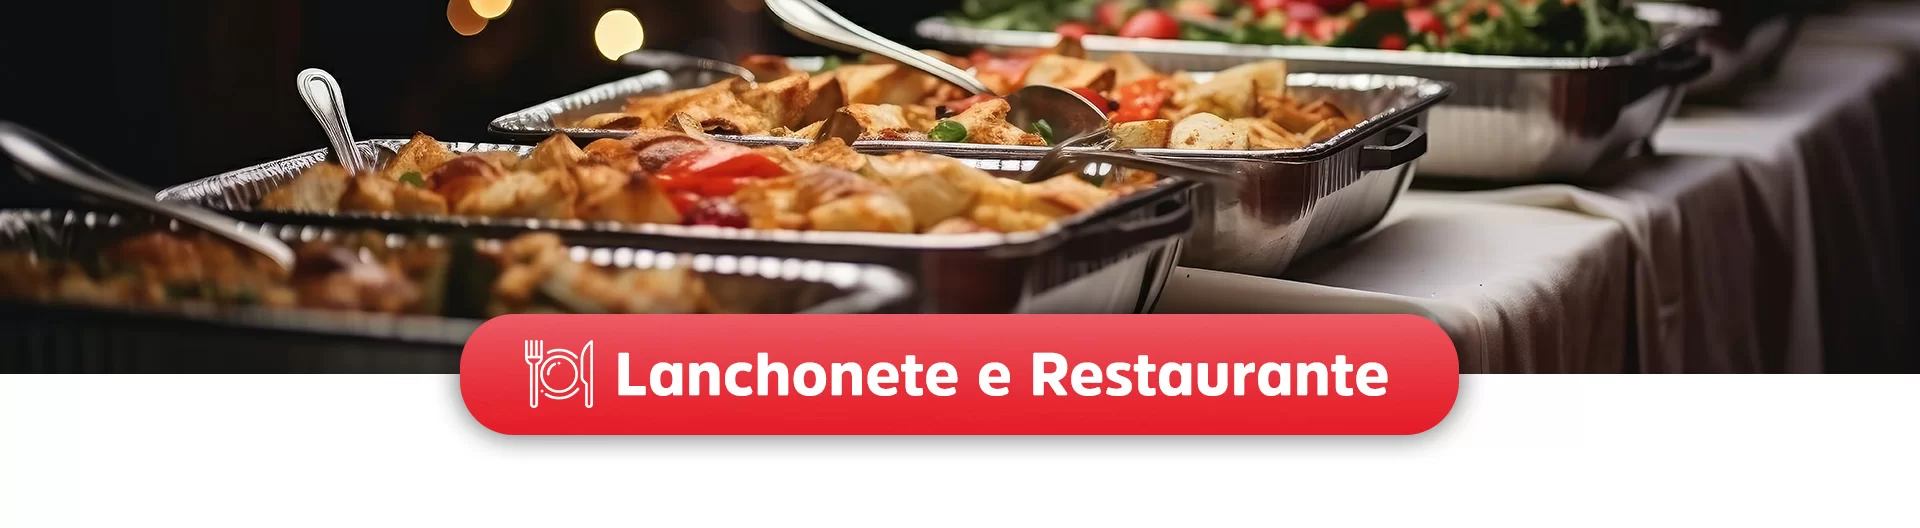 Banner Lanchonete e Restaurante